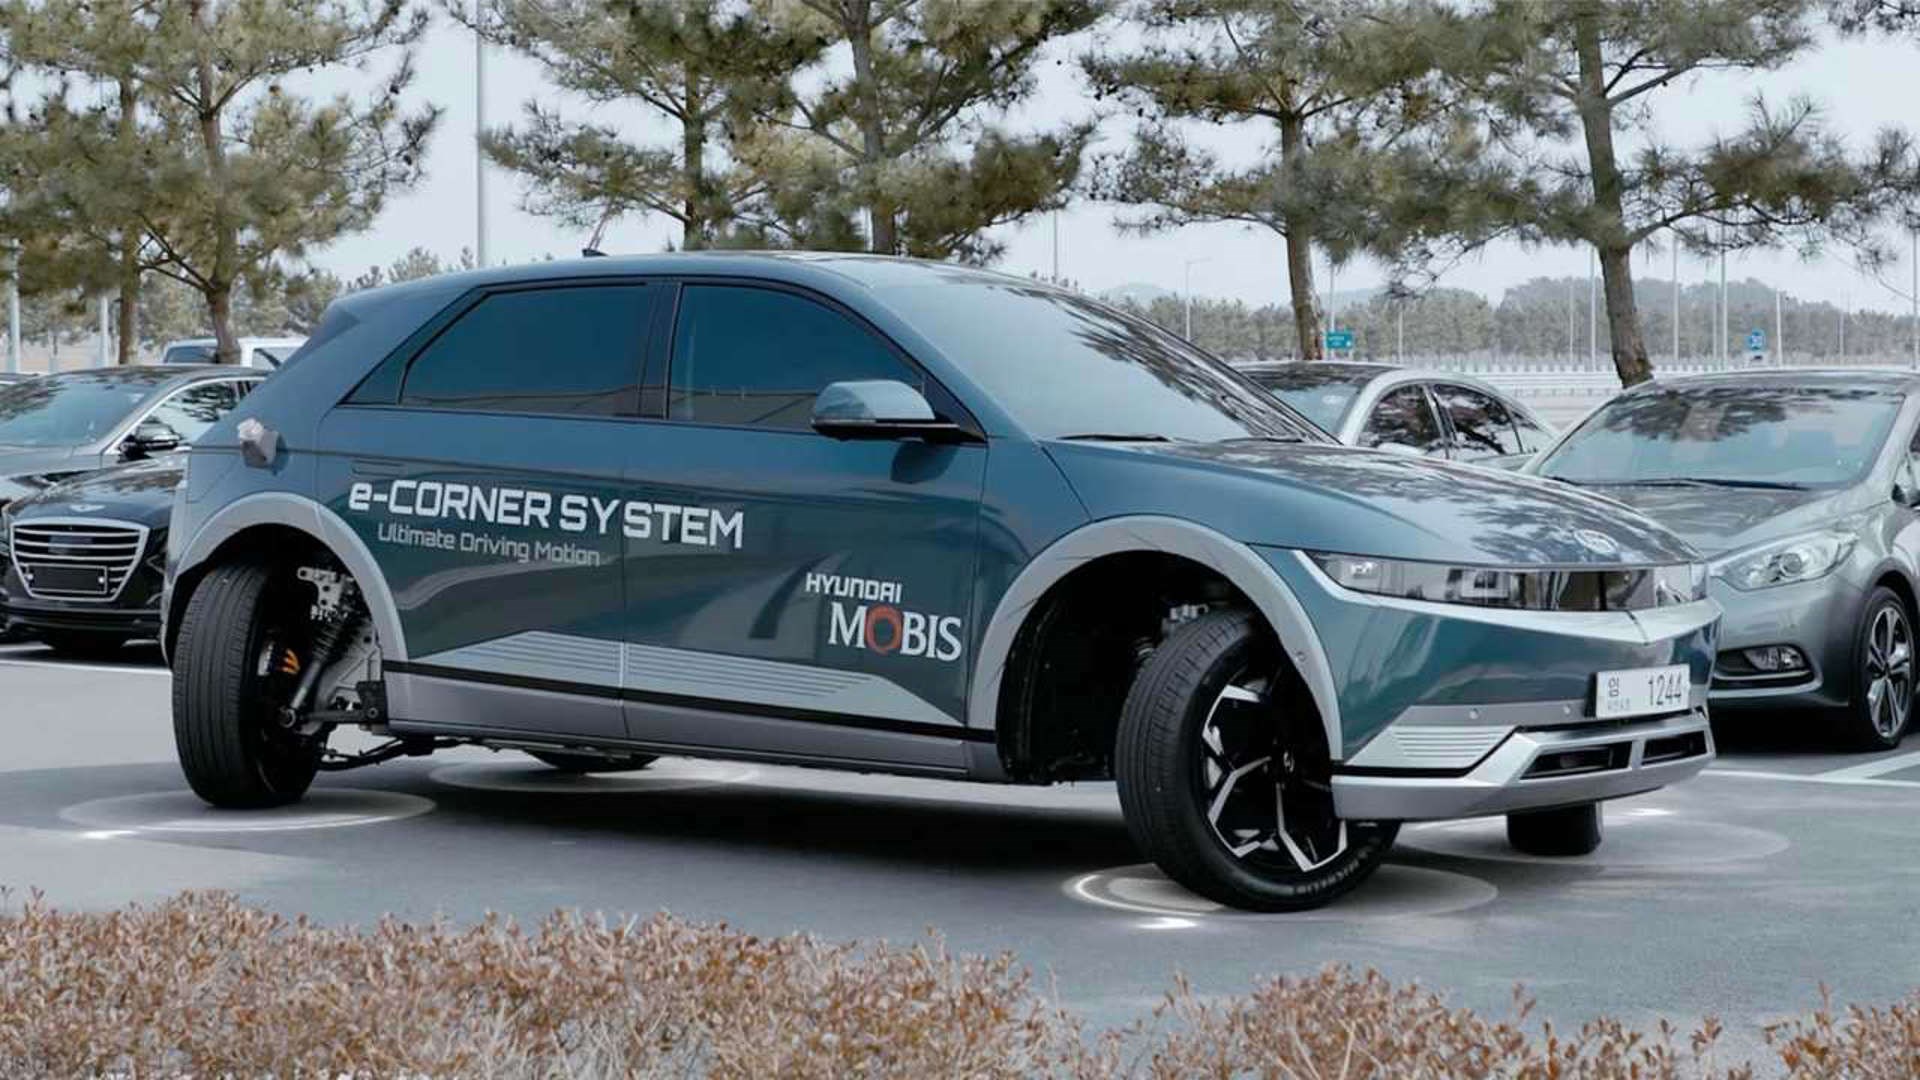 Hyundai'den paralel parka kesin çözüm: işte e-Corner sistemi